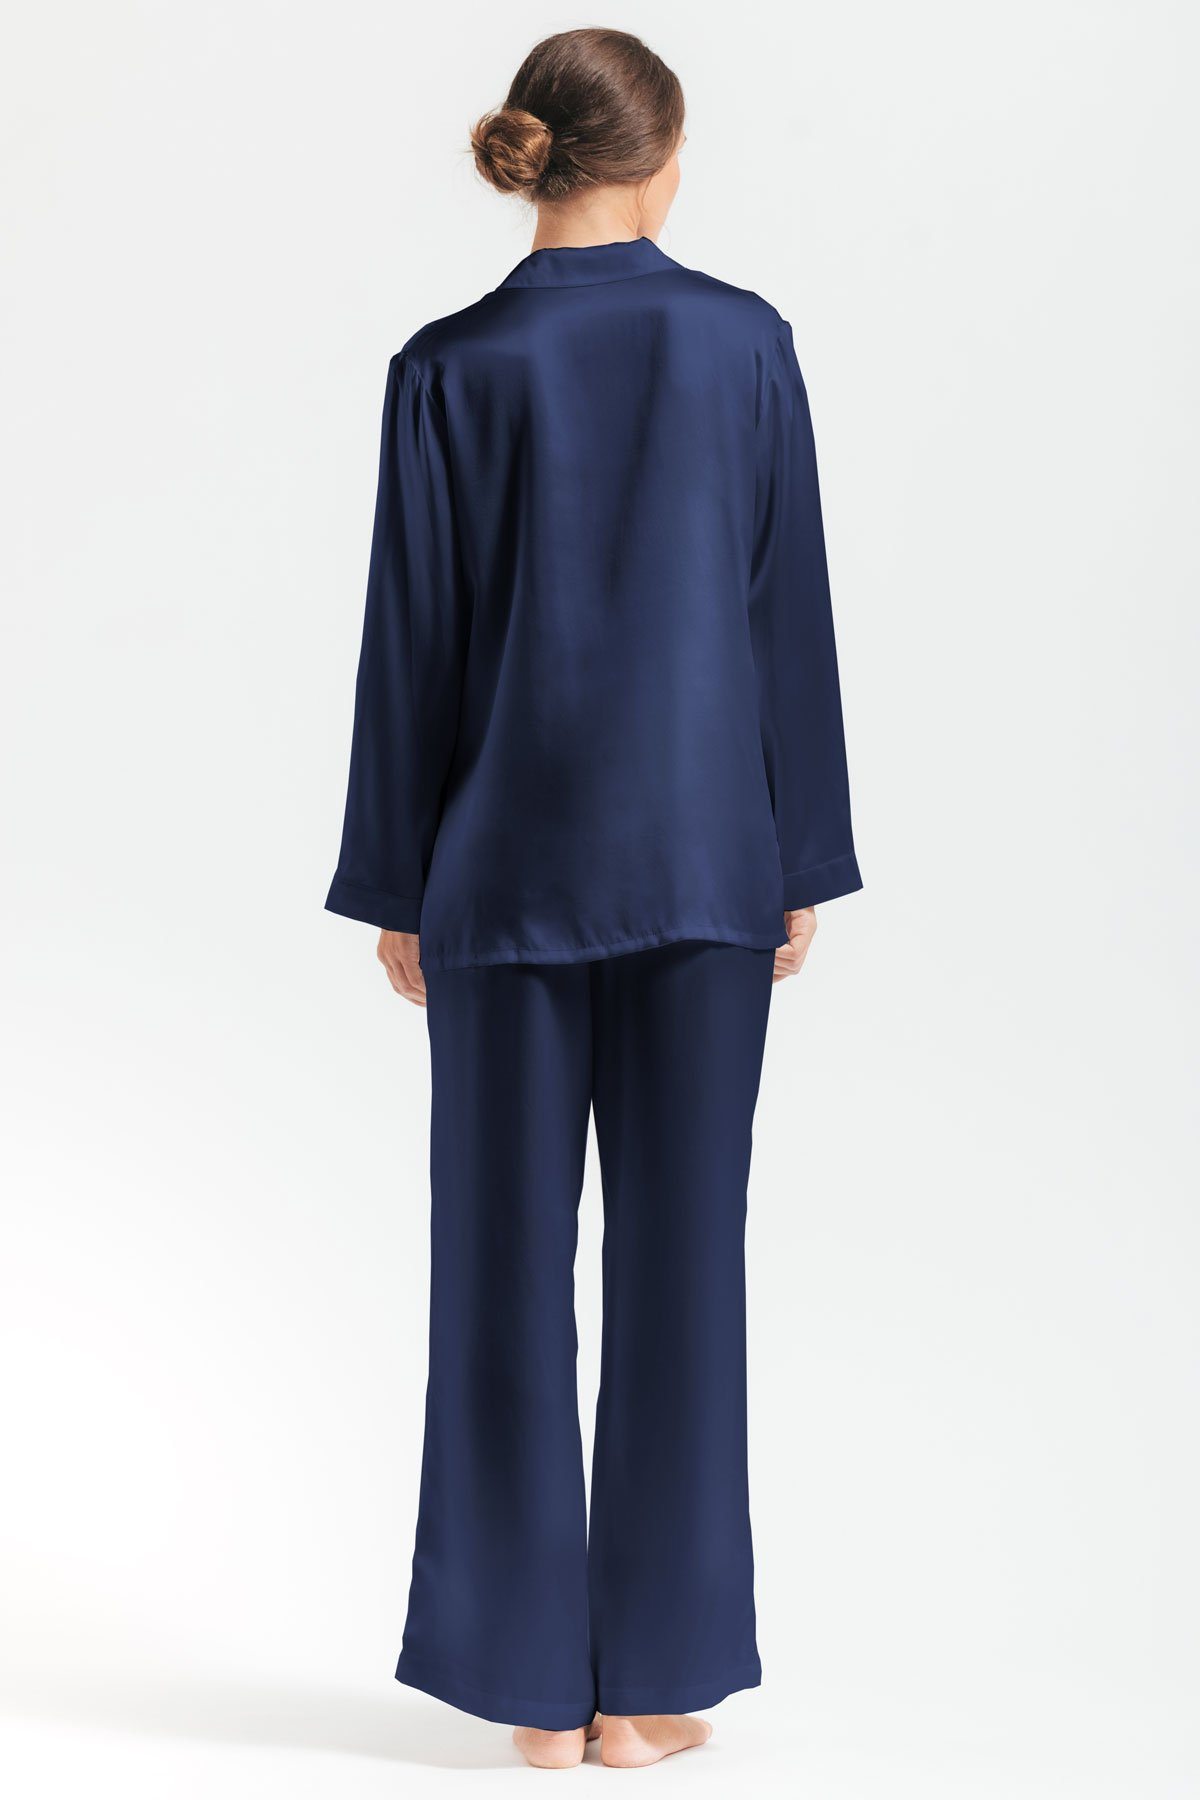 Backview of model wearing Morgan Silk pajama set in evening-blue